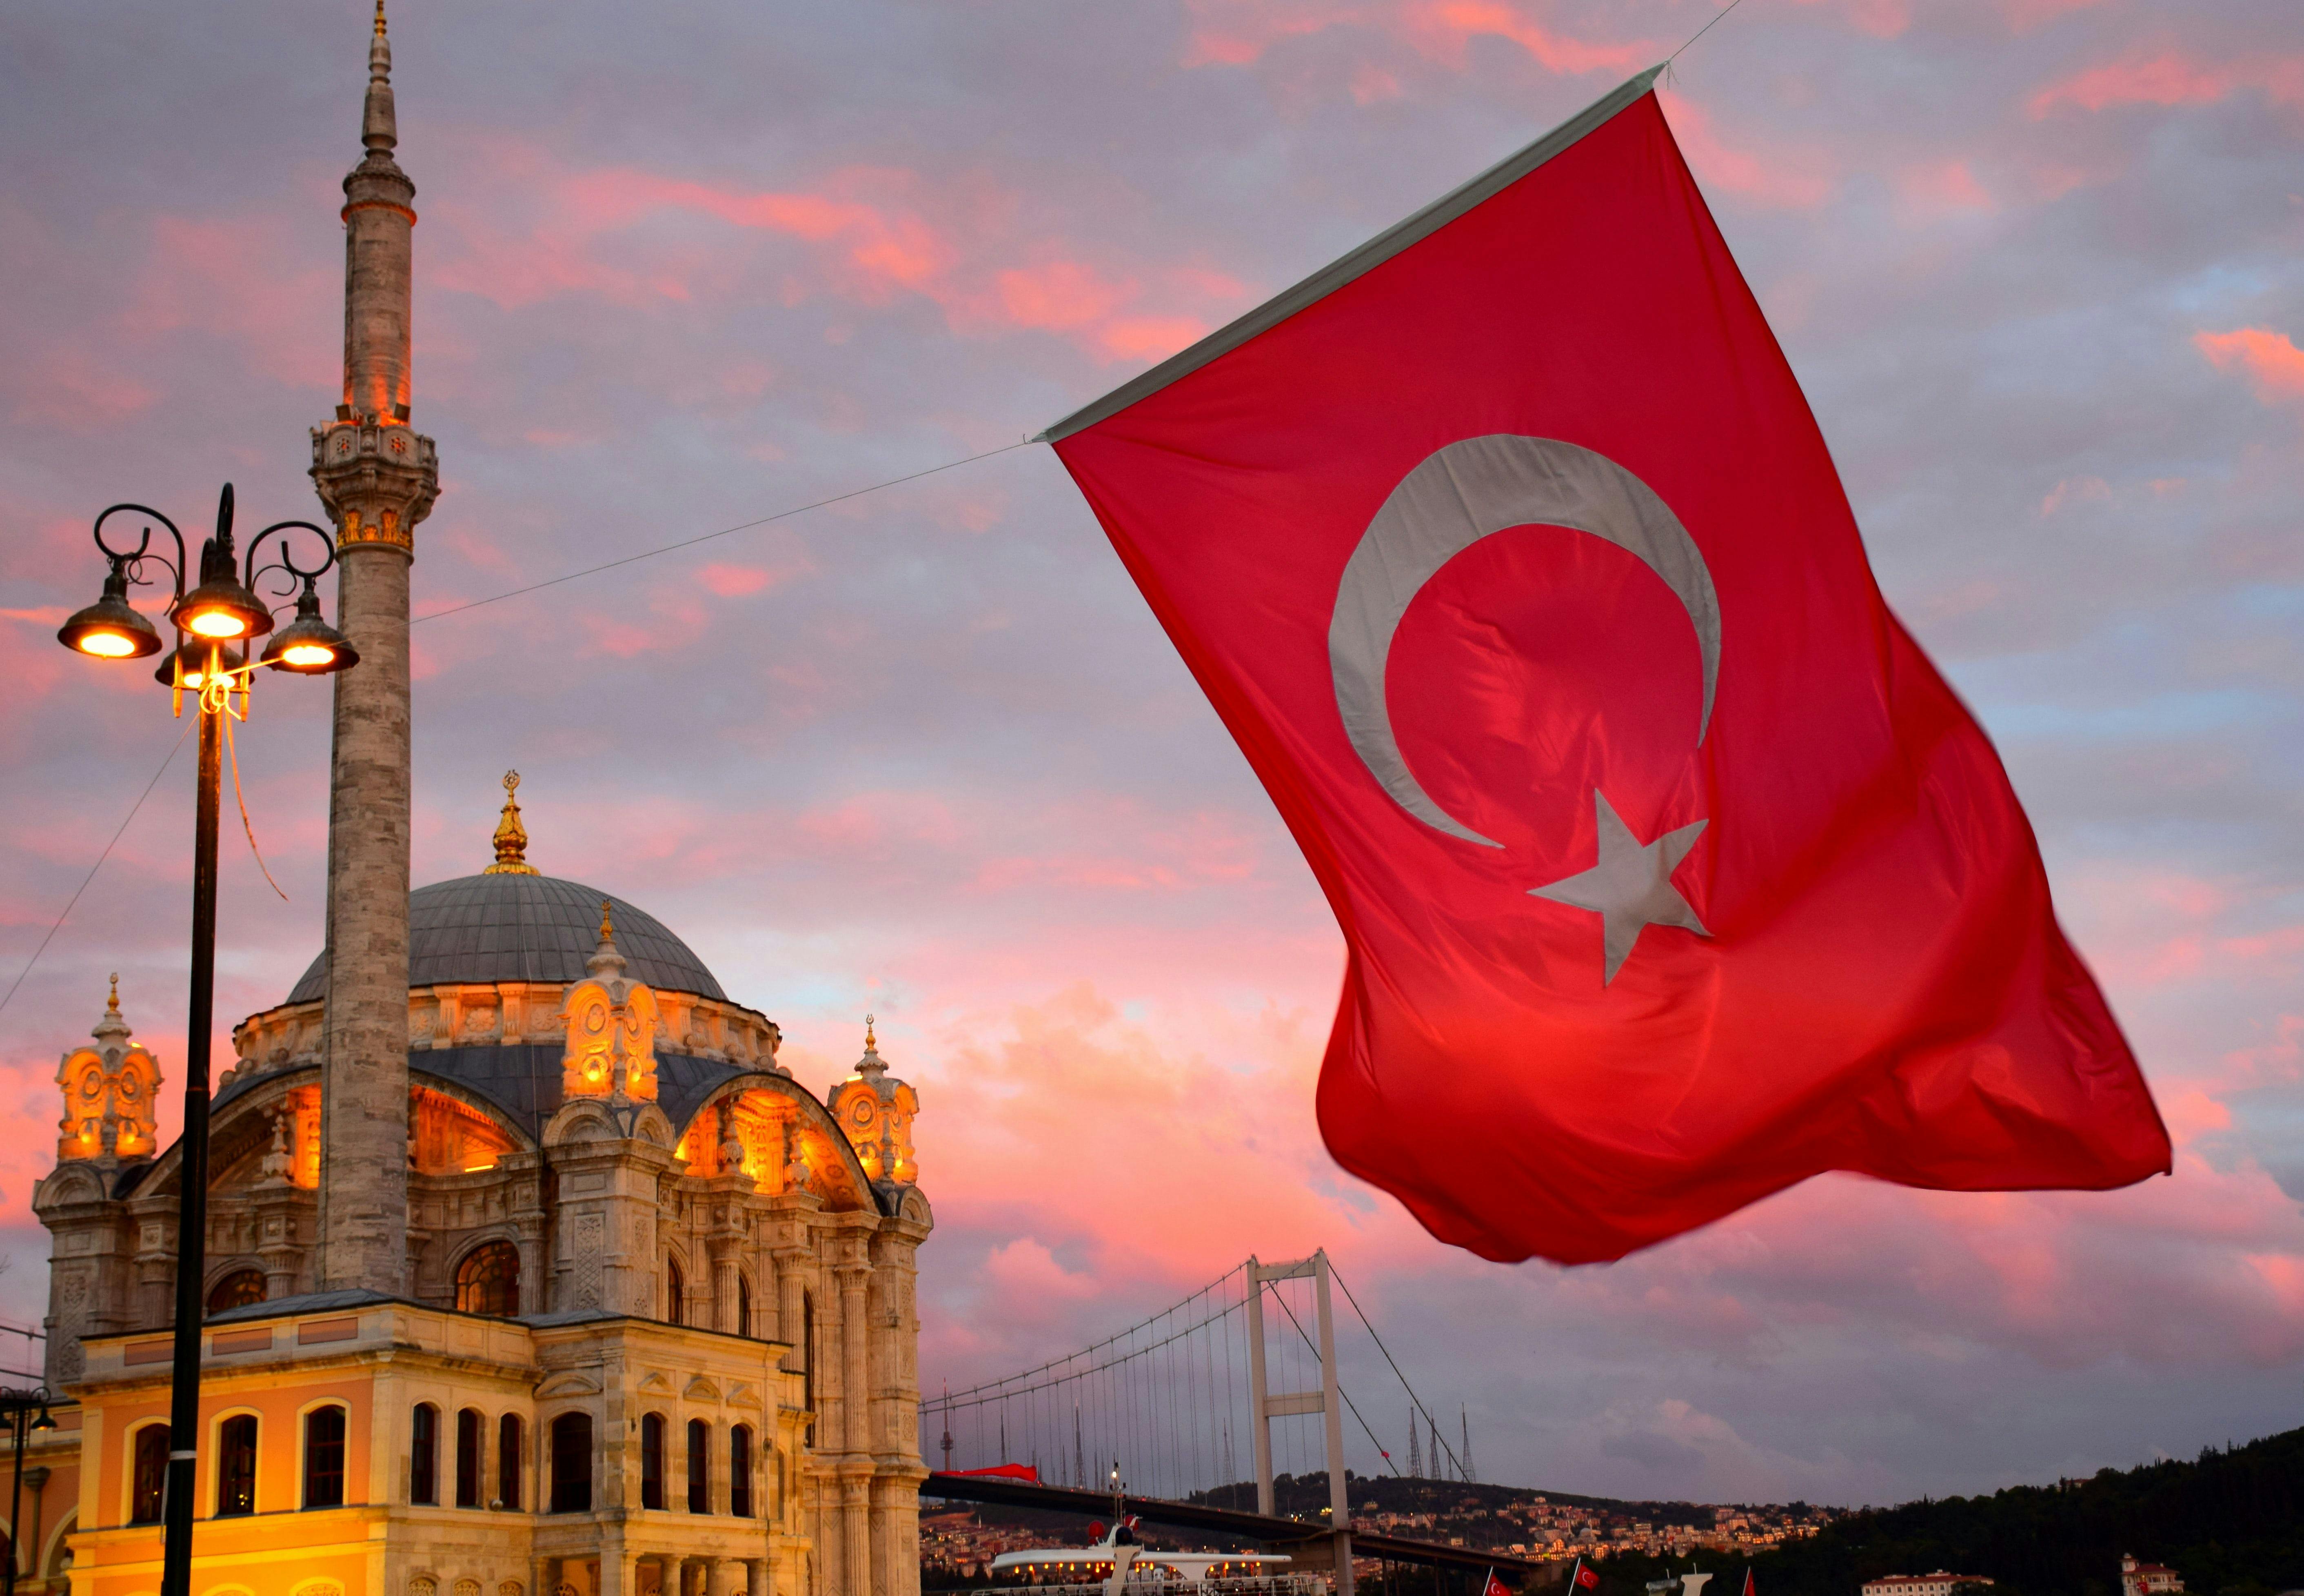 turkey tourist visa us citizens